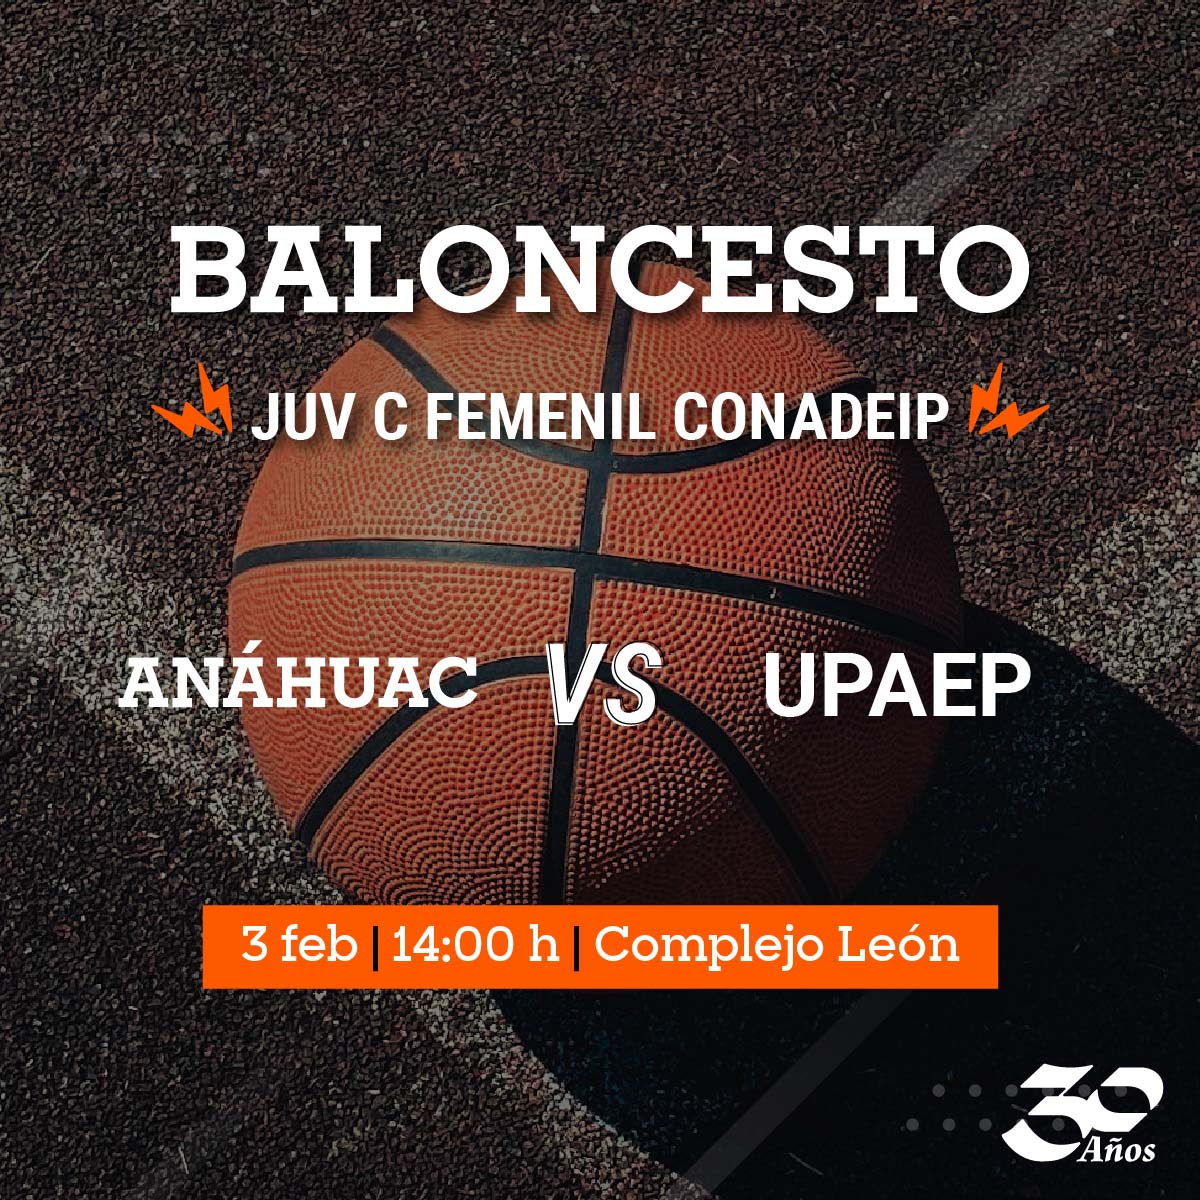 Baloncesto CONADEIP Femenil JUV C vs UPAEP